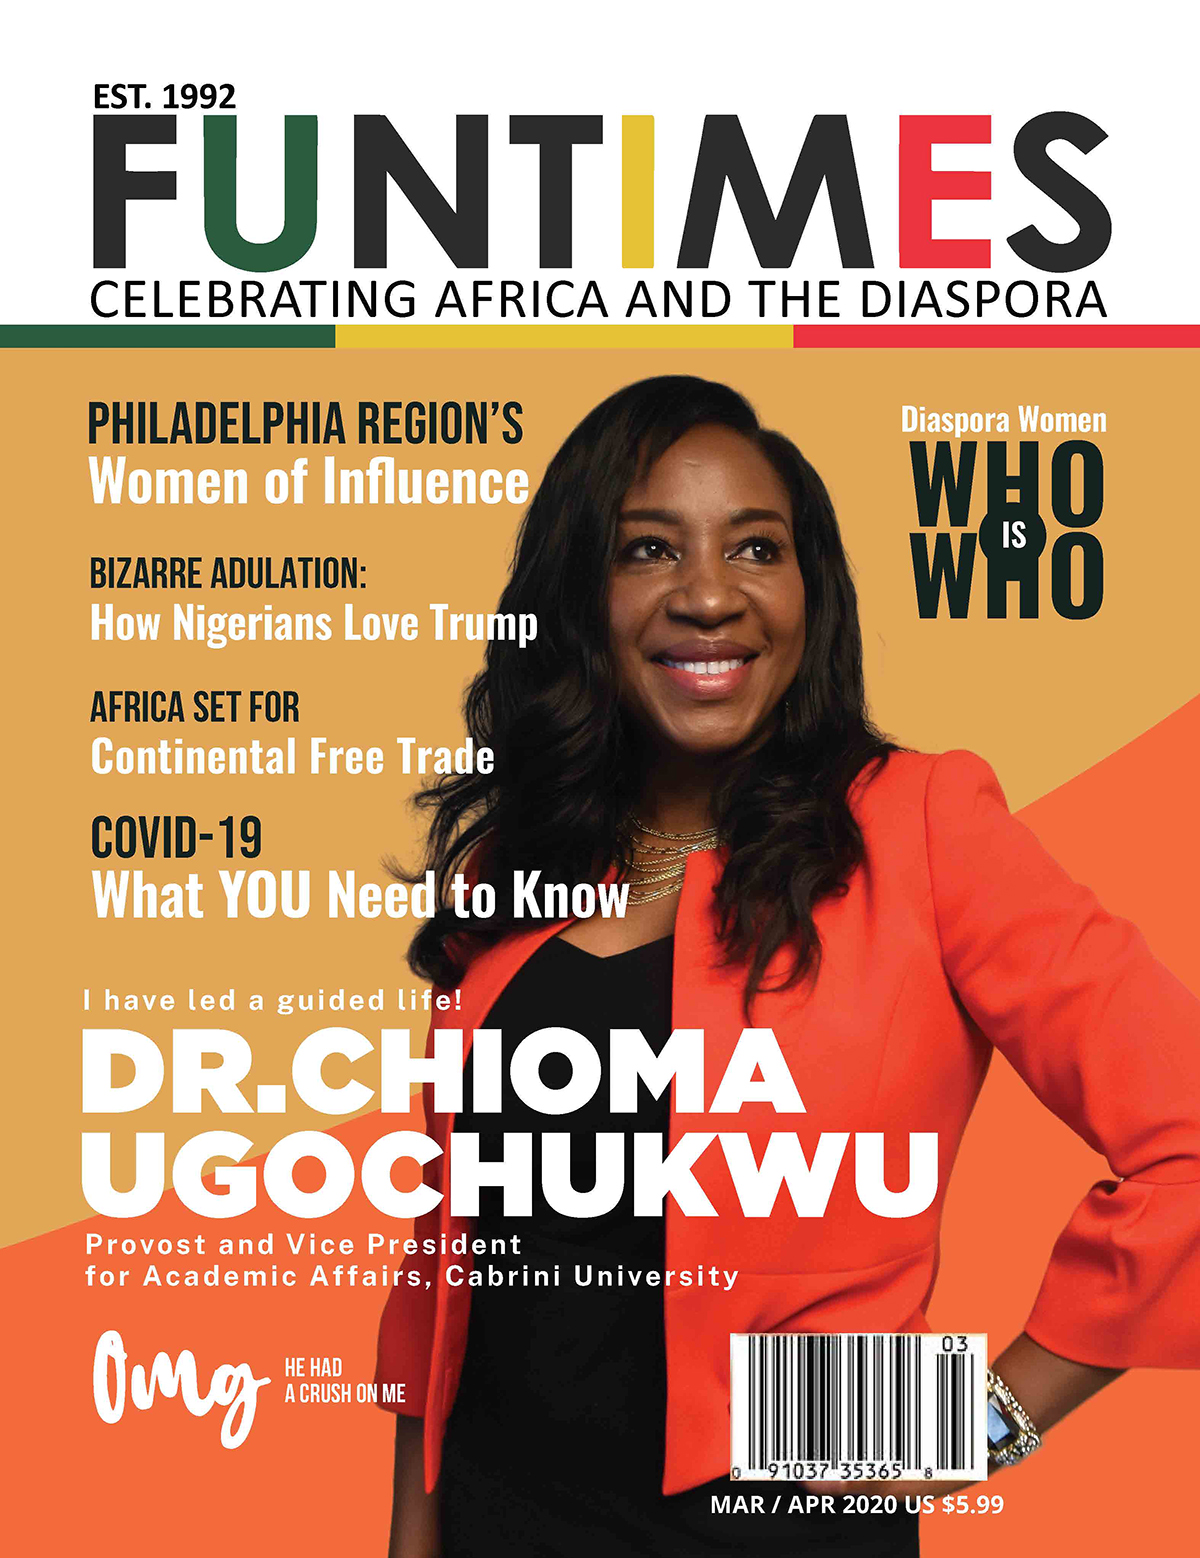 Chioma Ugochukwu on Fun Times Magazine Cover